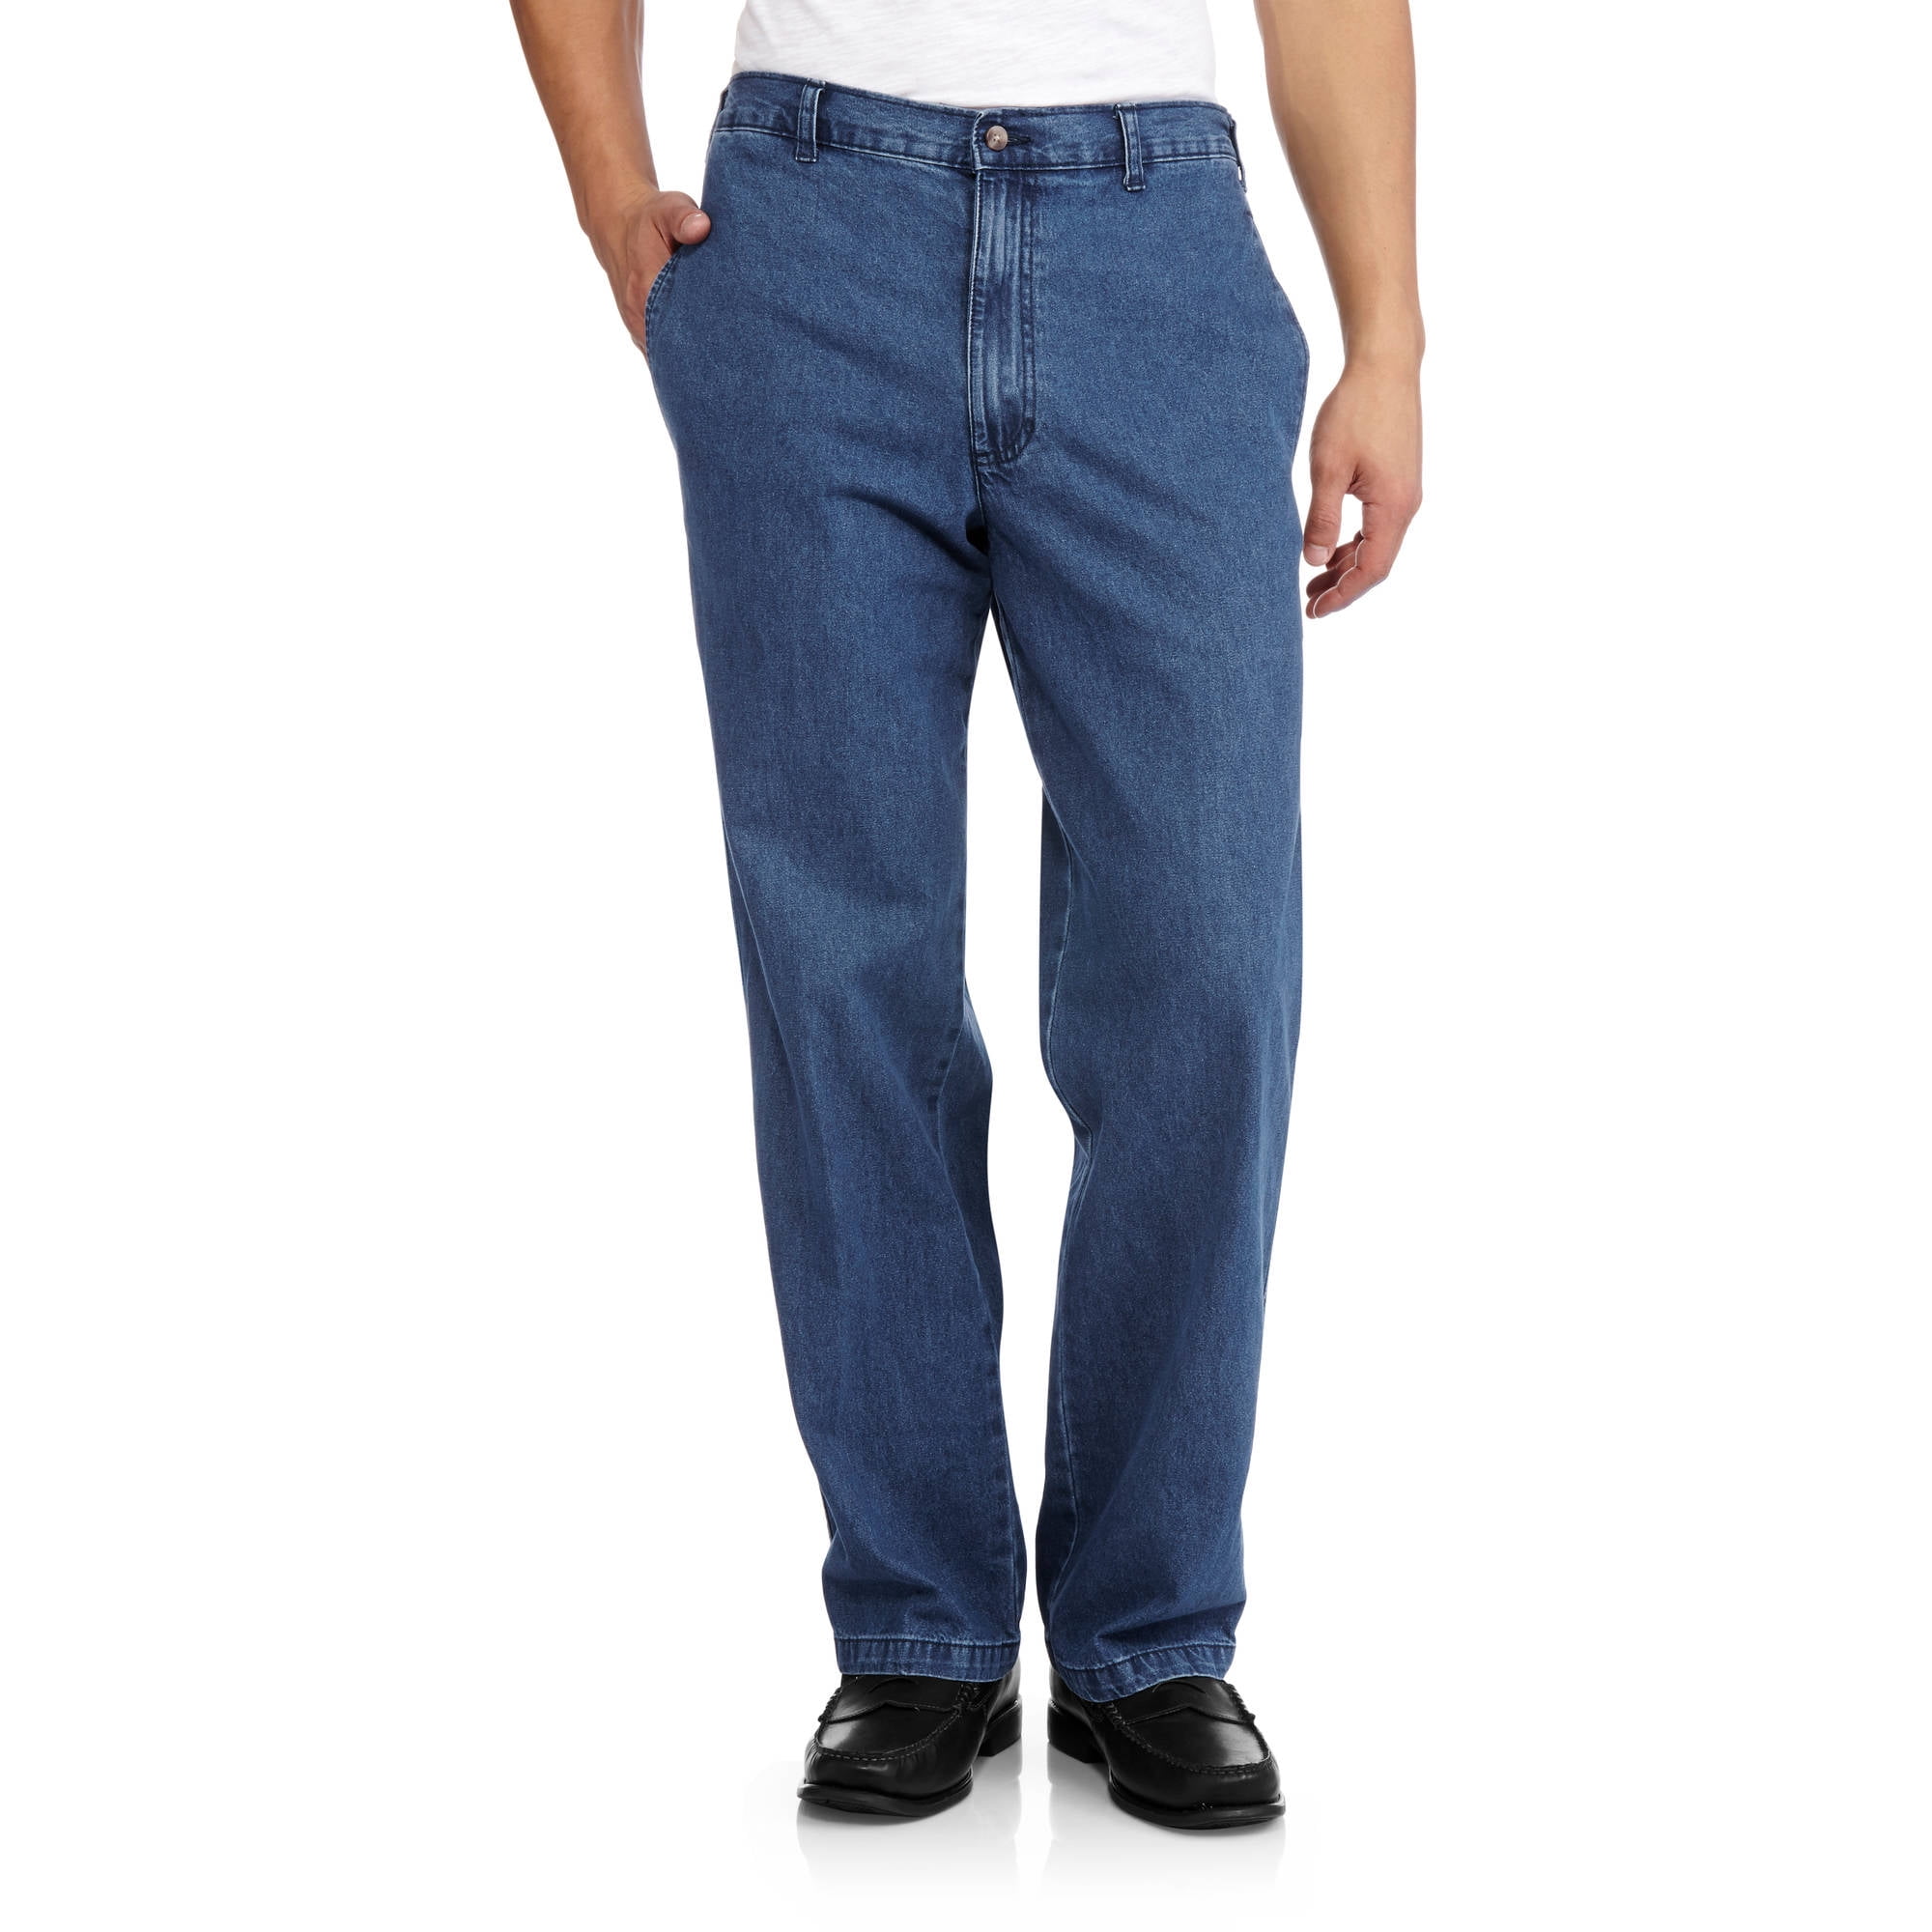 armorex fr jeans price